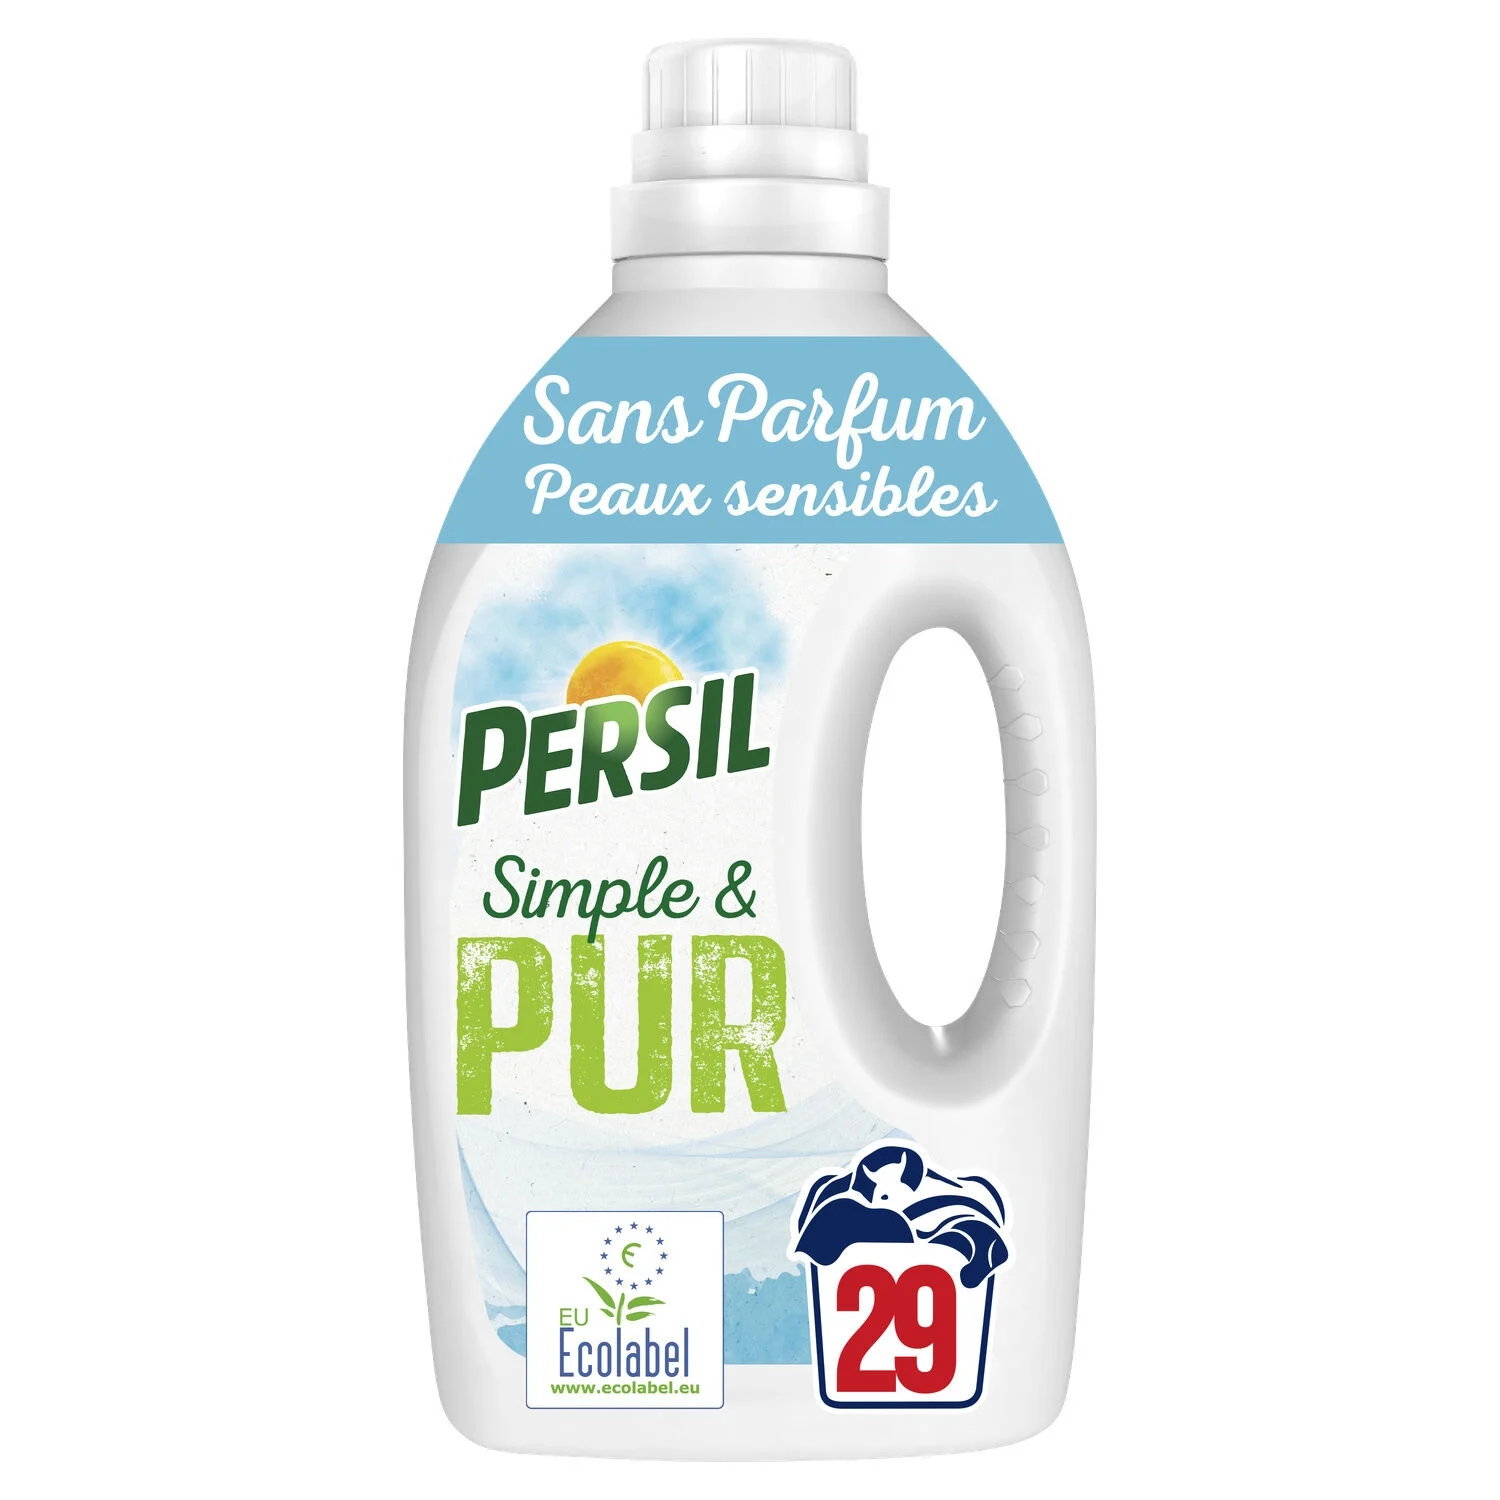 29d 1l32 Ss Parf Ecolab Persil